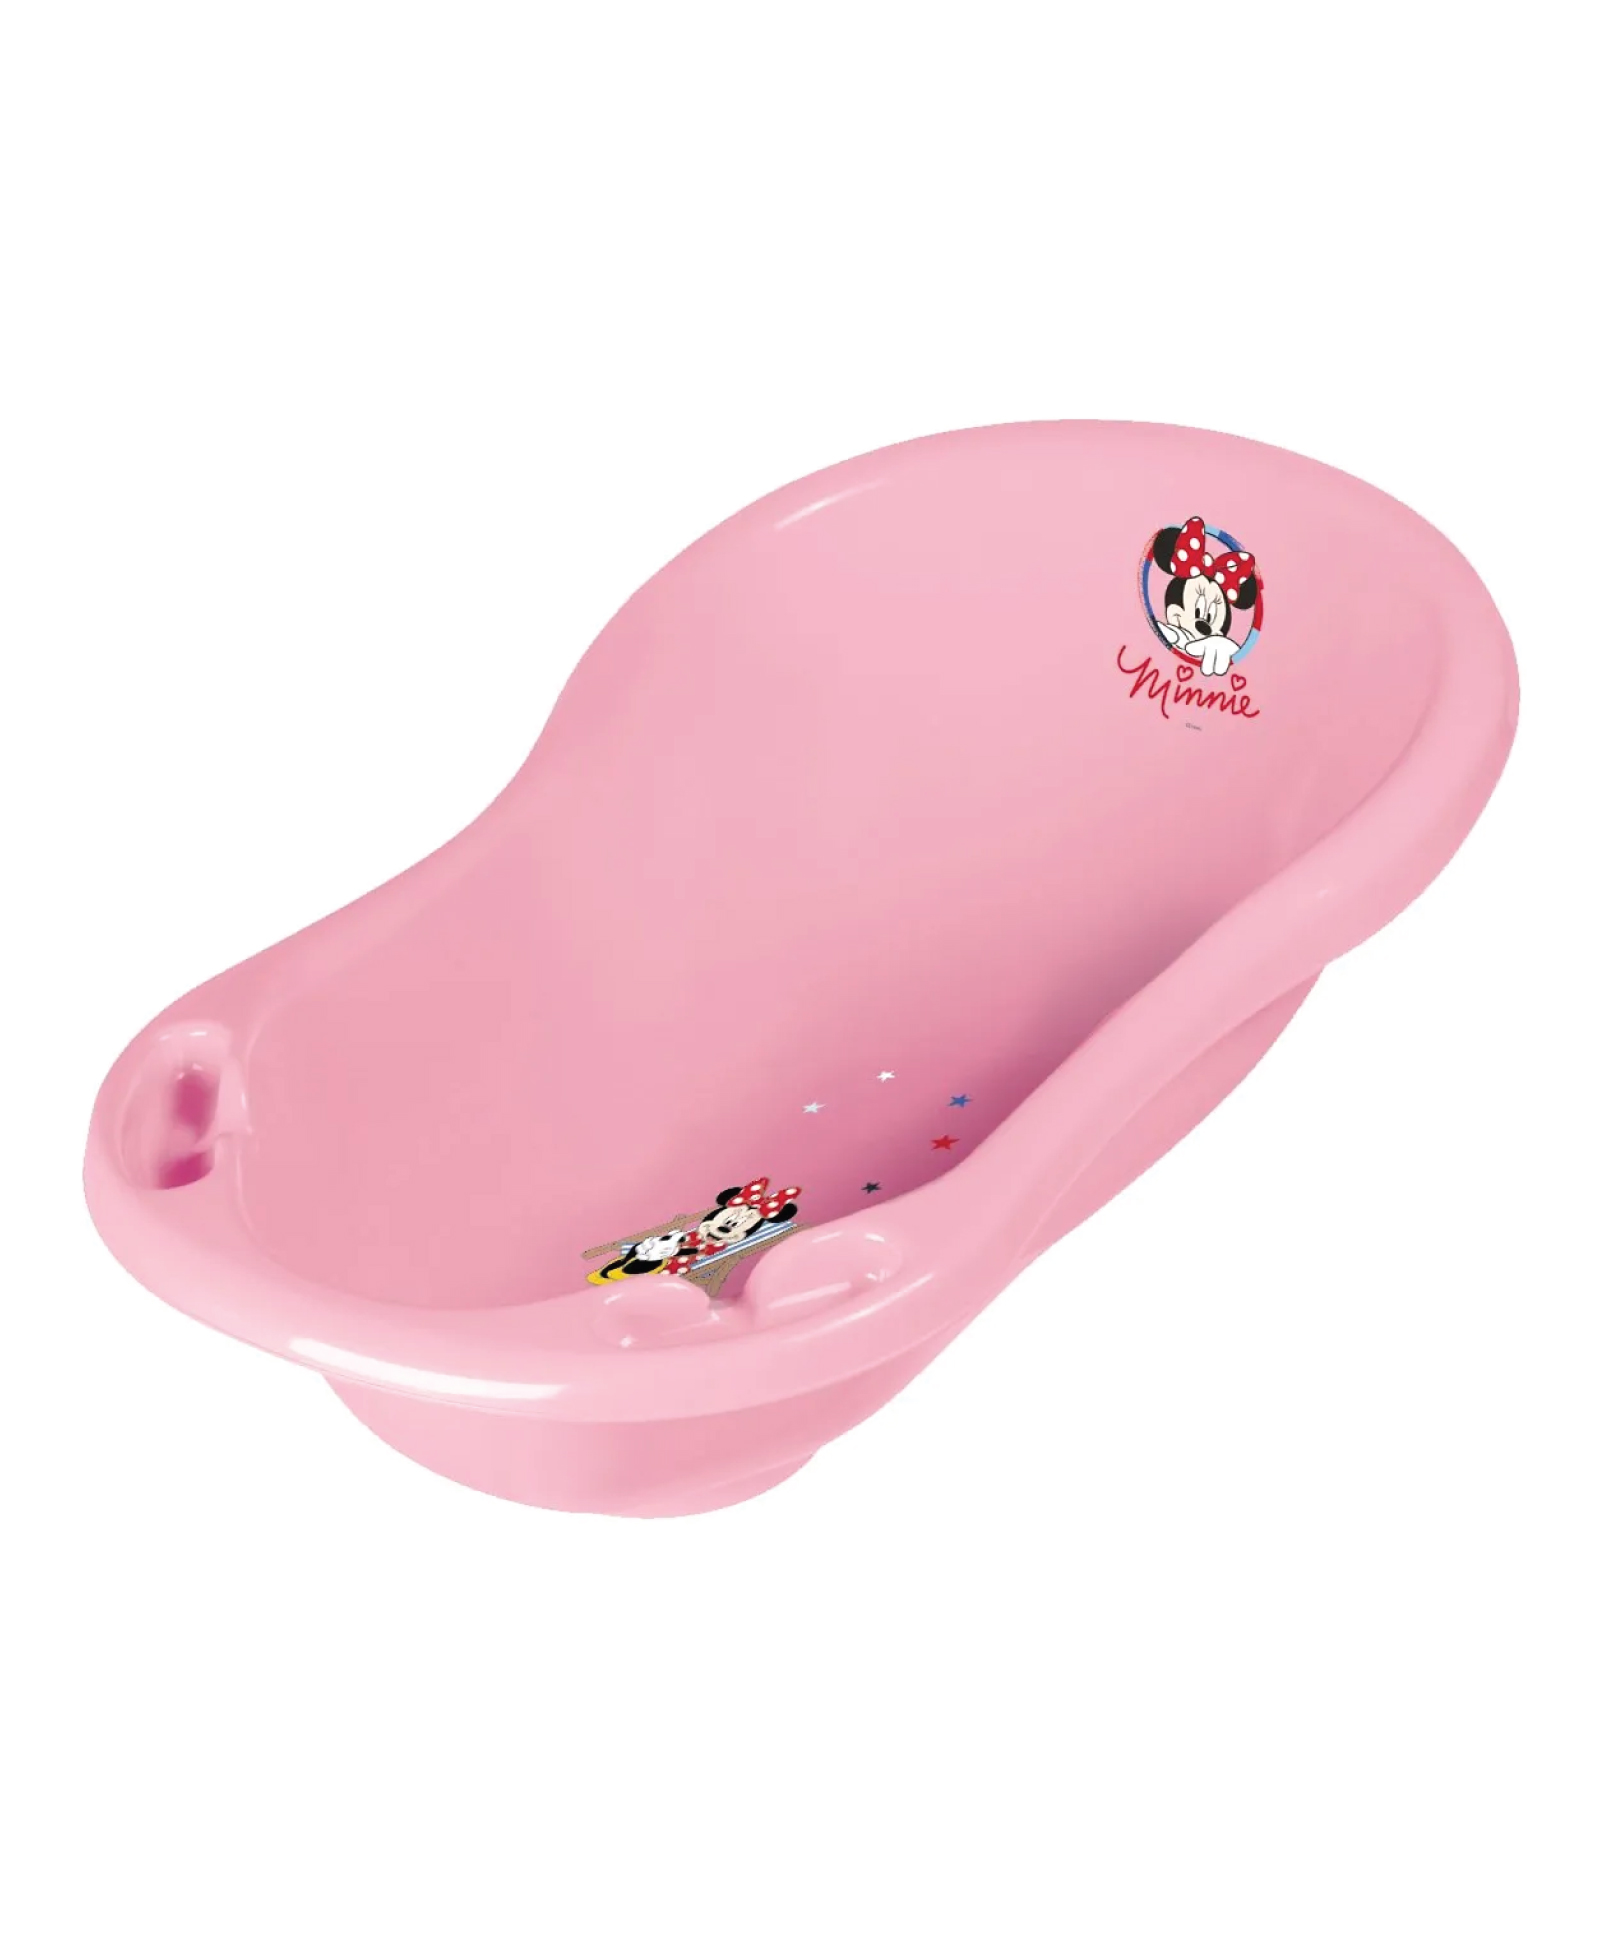 Baby Bath Tub With Plug Minnie Mouse